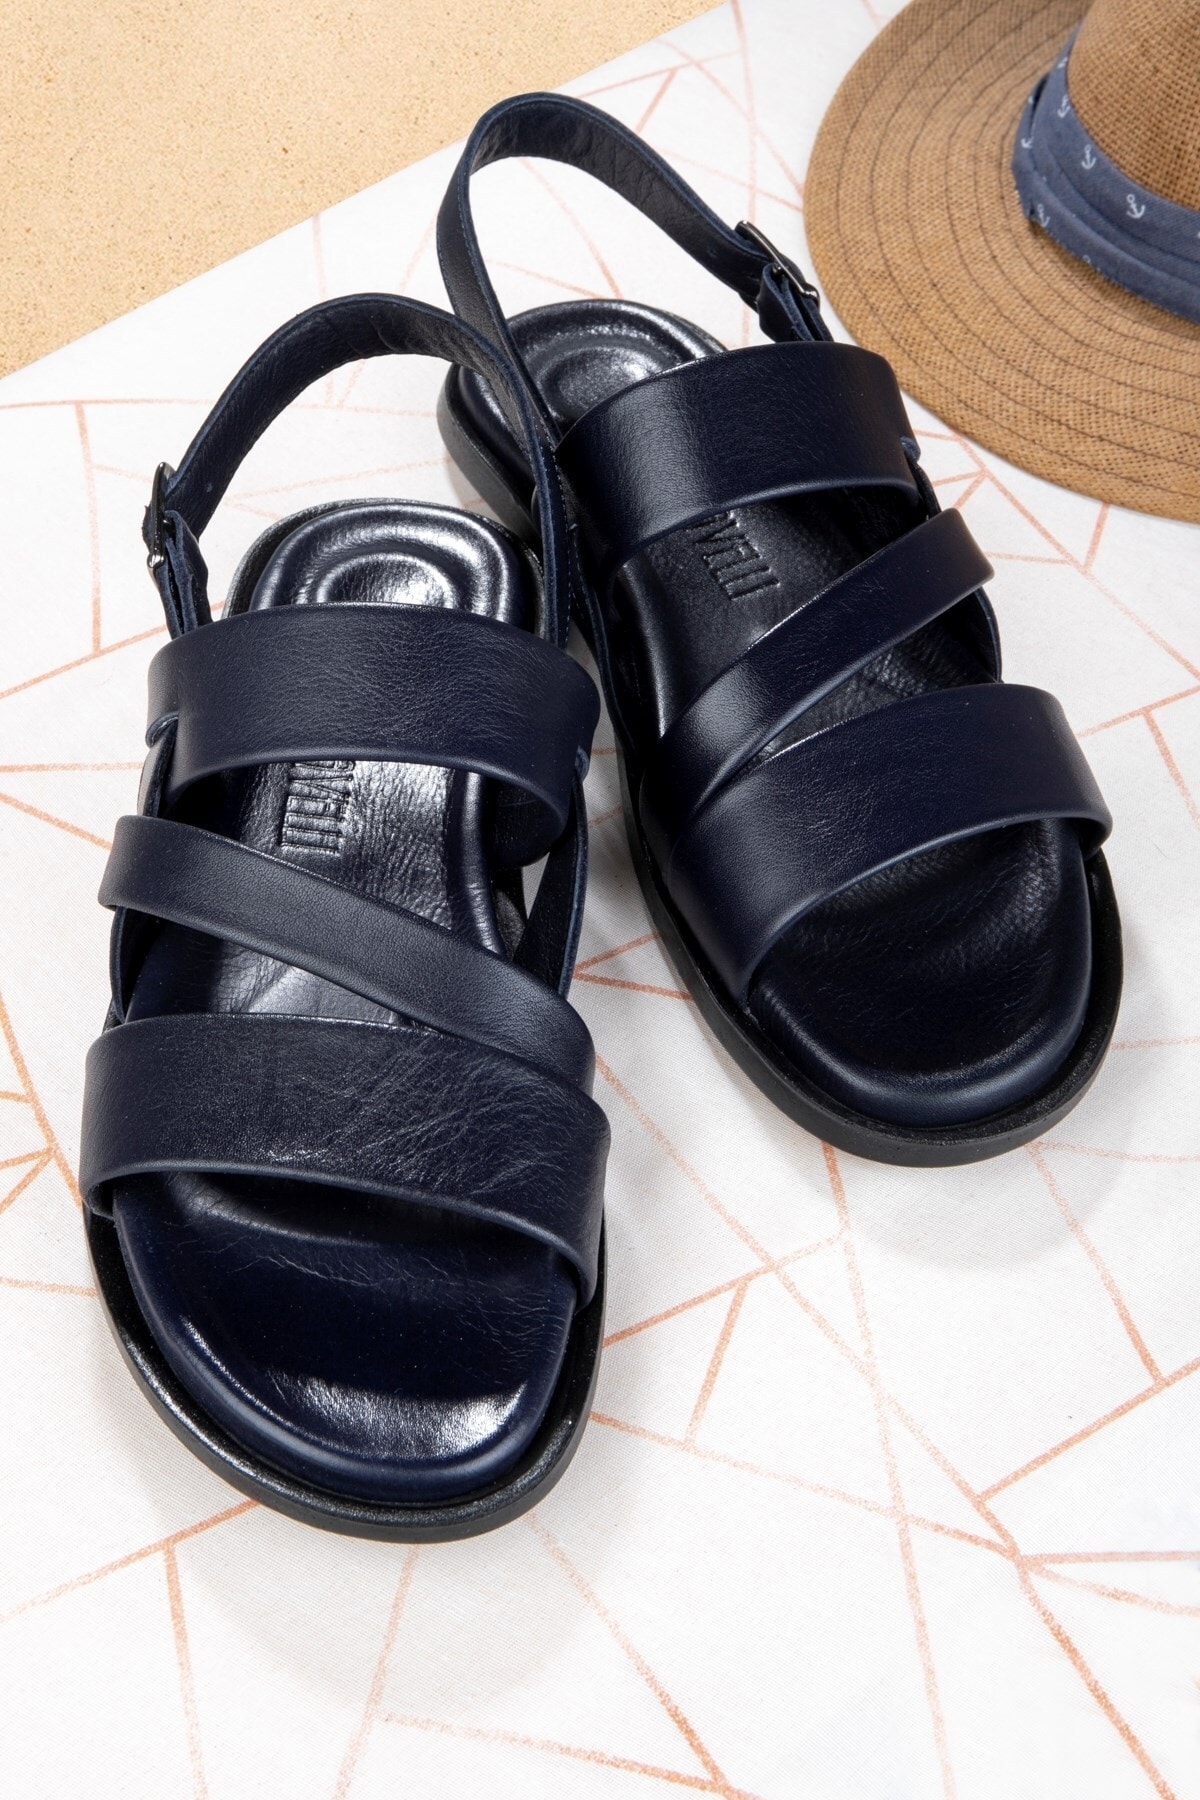 Ducavelli Roma Genuine Leather Men's Sandals, Genuine Leather Sandals, Orthopedic Sole Sandals, Light Leather